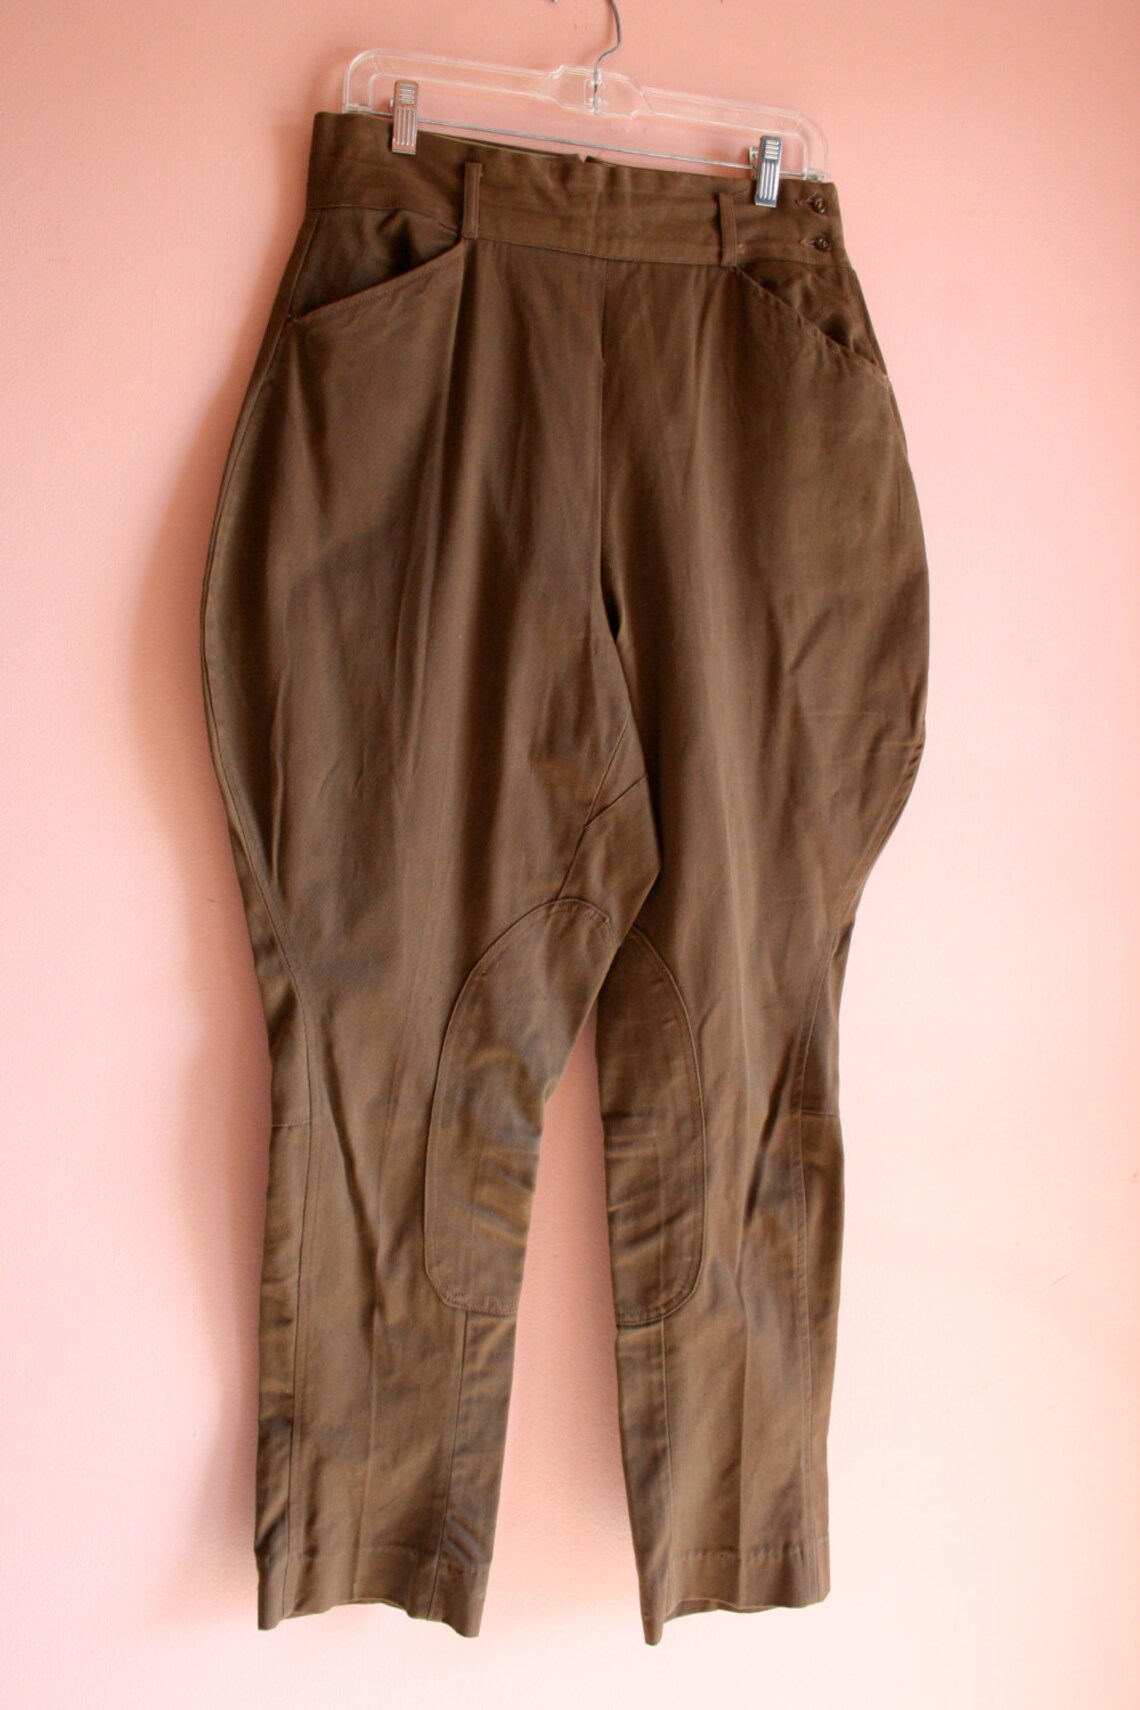 Vintage 1940's Jodhpurs / Sporting Pants / Hunting Pants / | Etsy